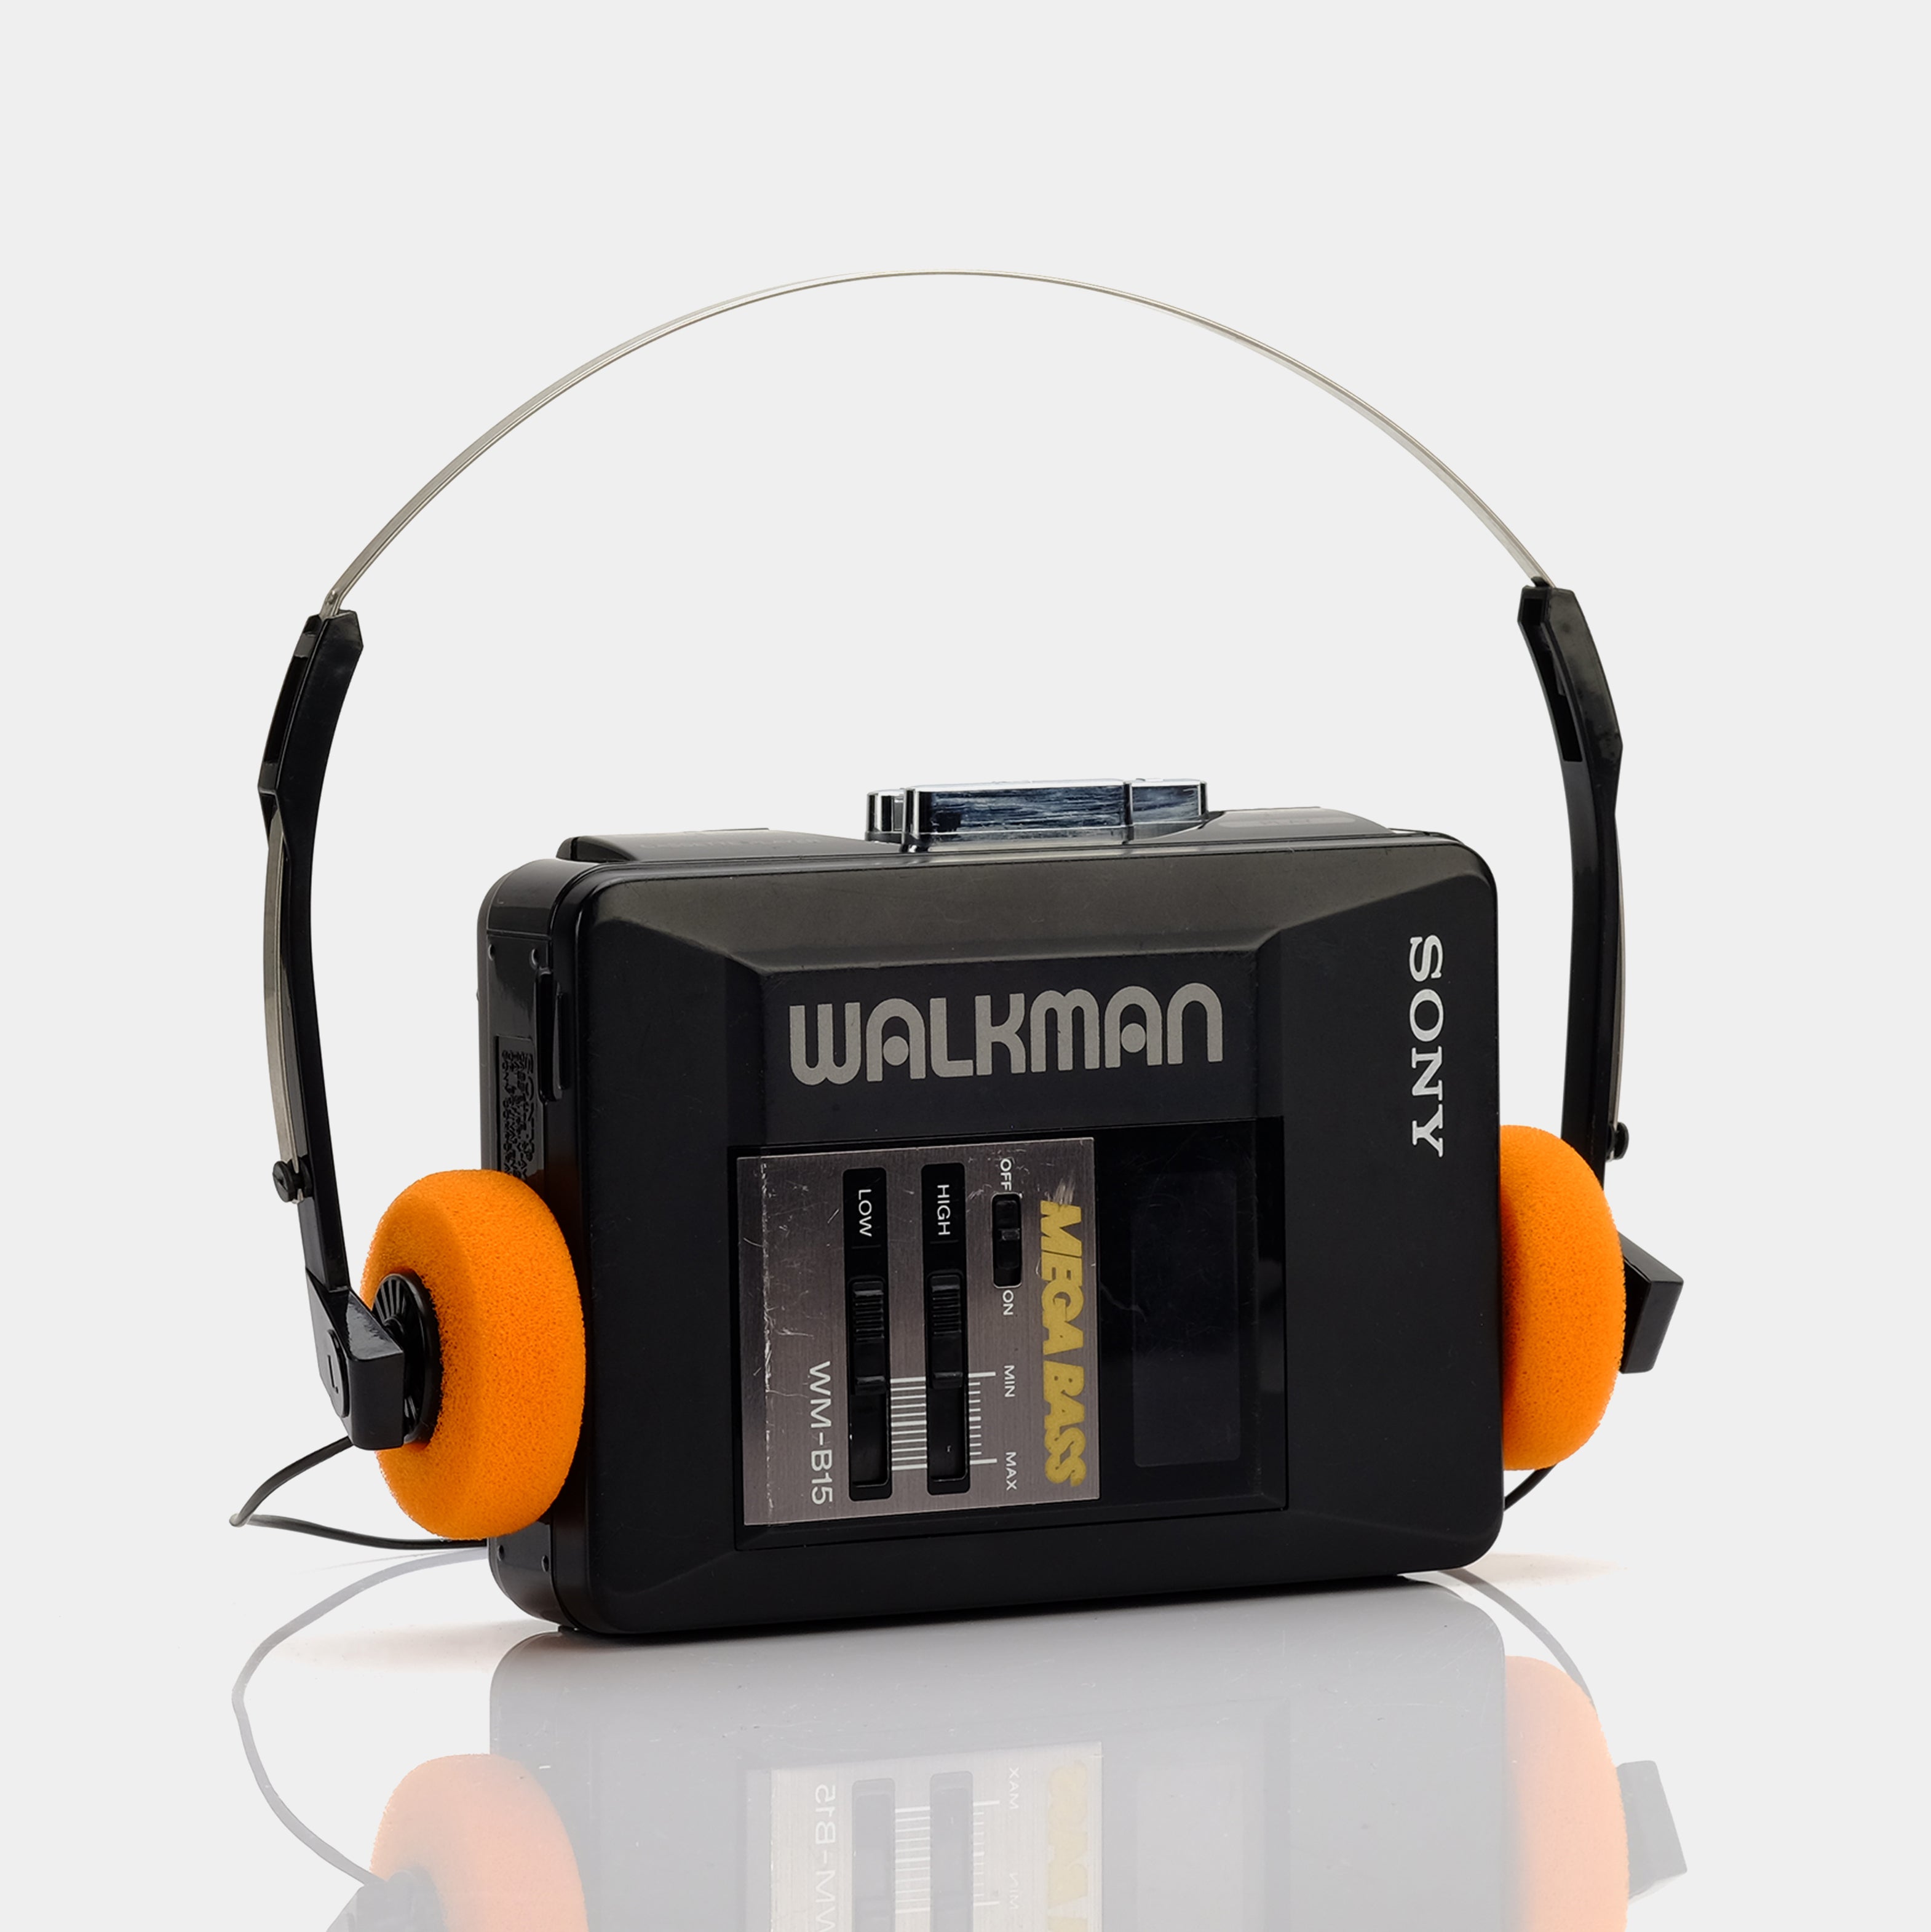 Sony Walkman WM-B15 Portable Cassette Player